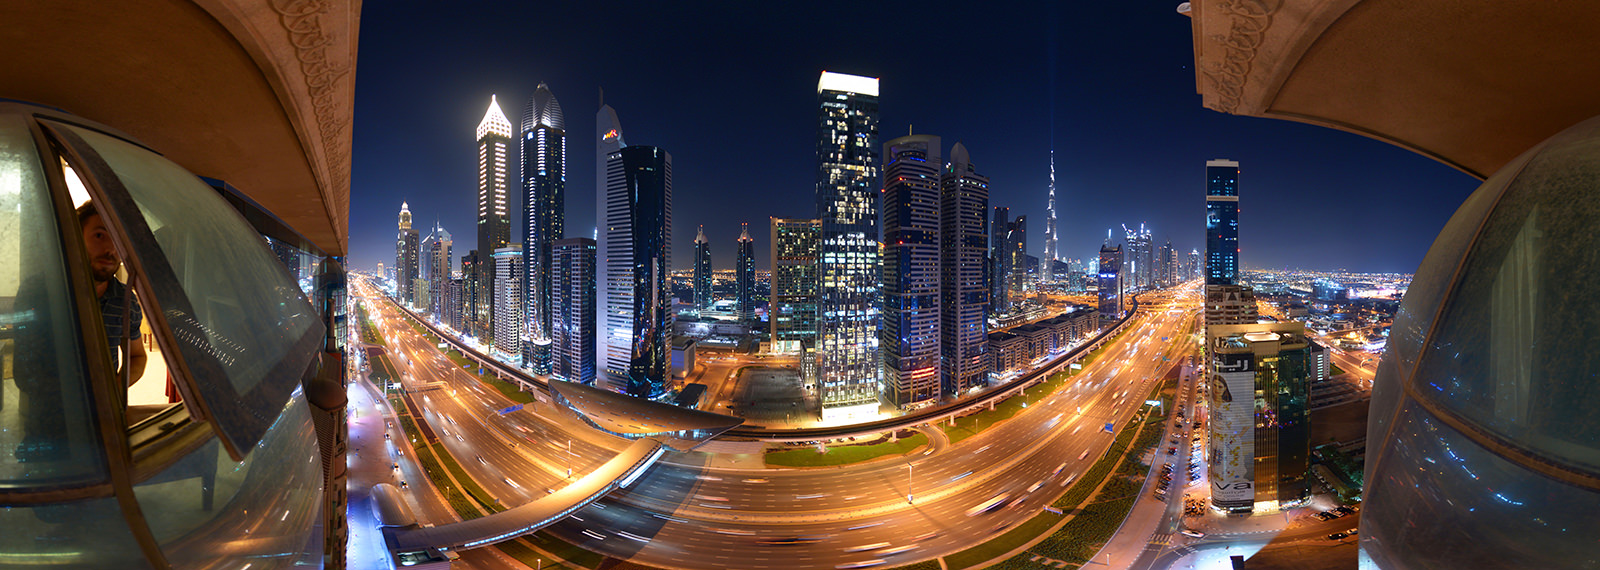 Sheikh Zayed DIFC, Dubai - Virtual tour